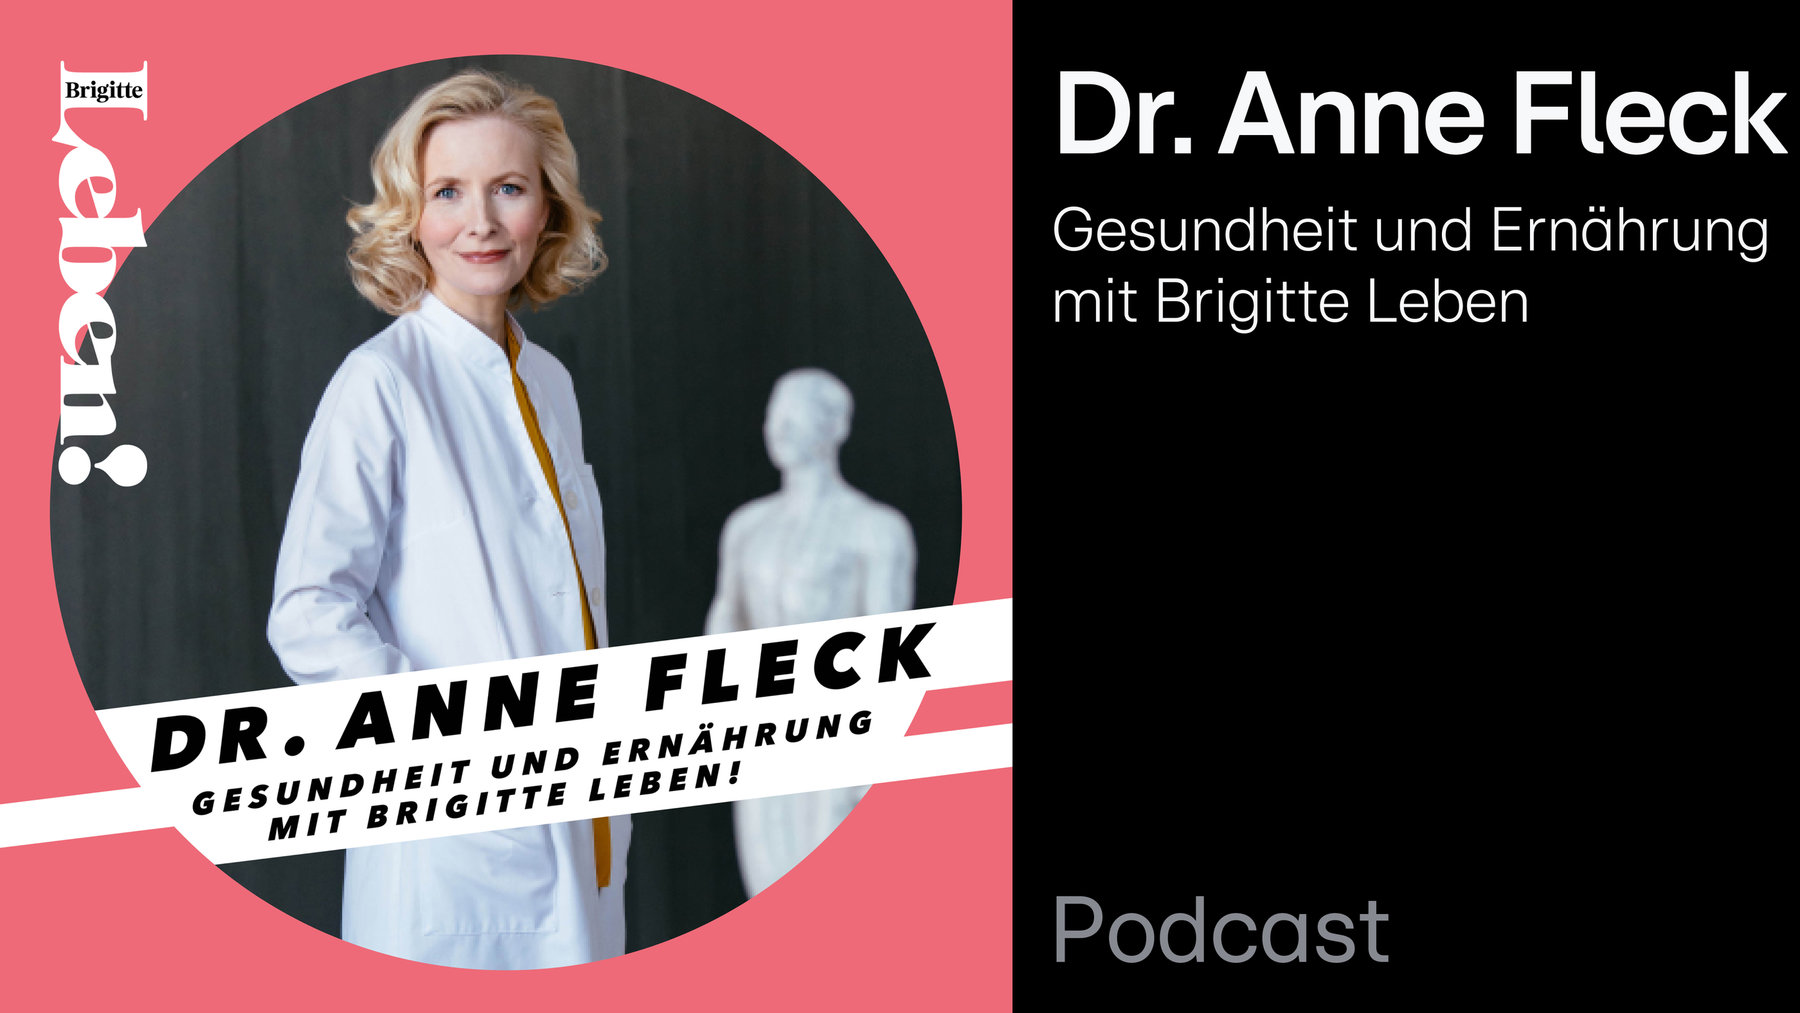 Dr. Anne Fleck